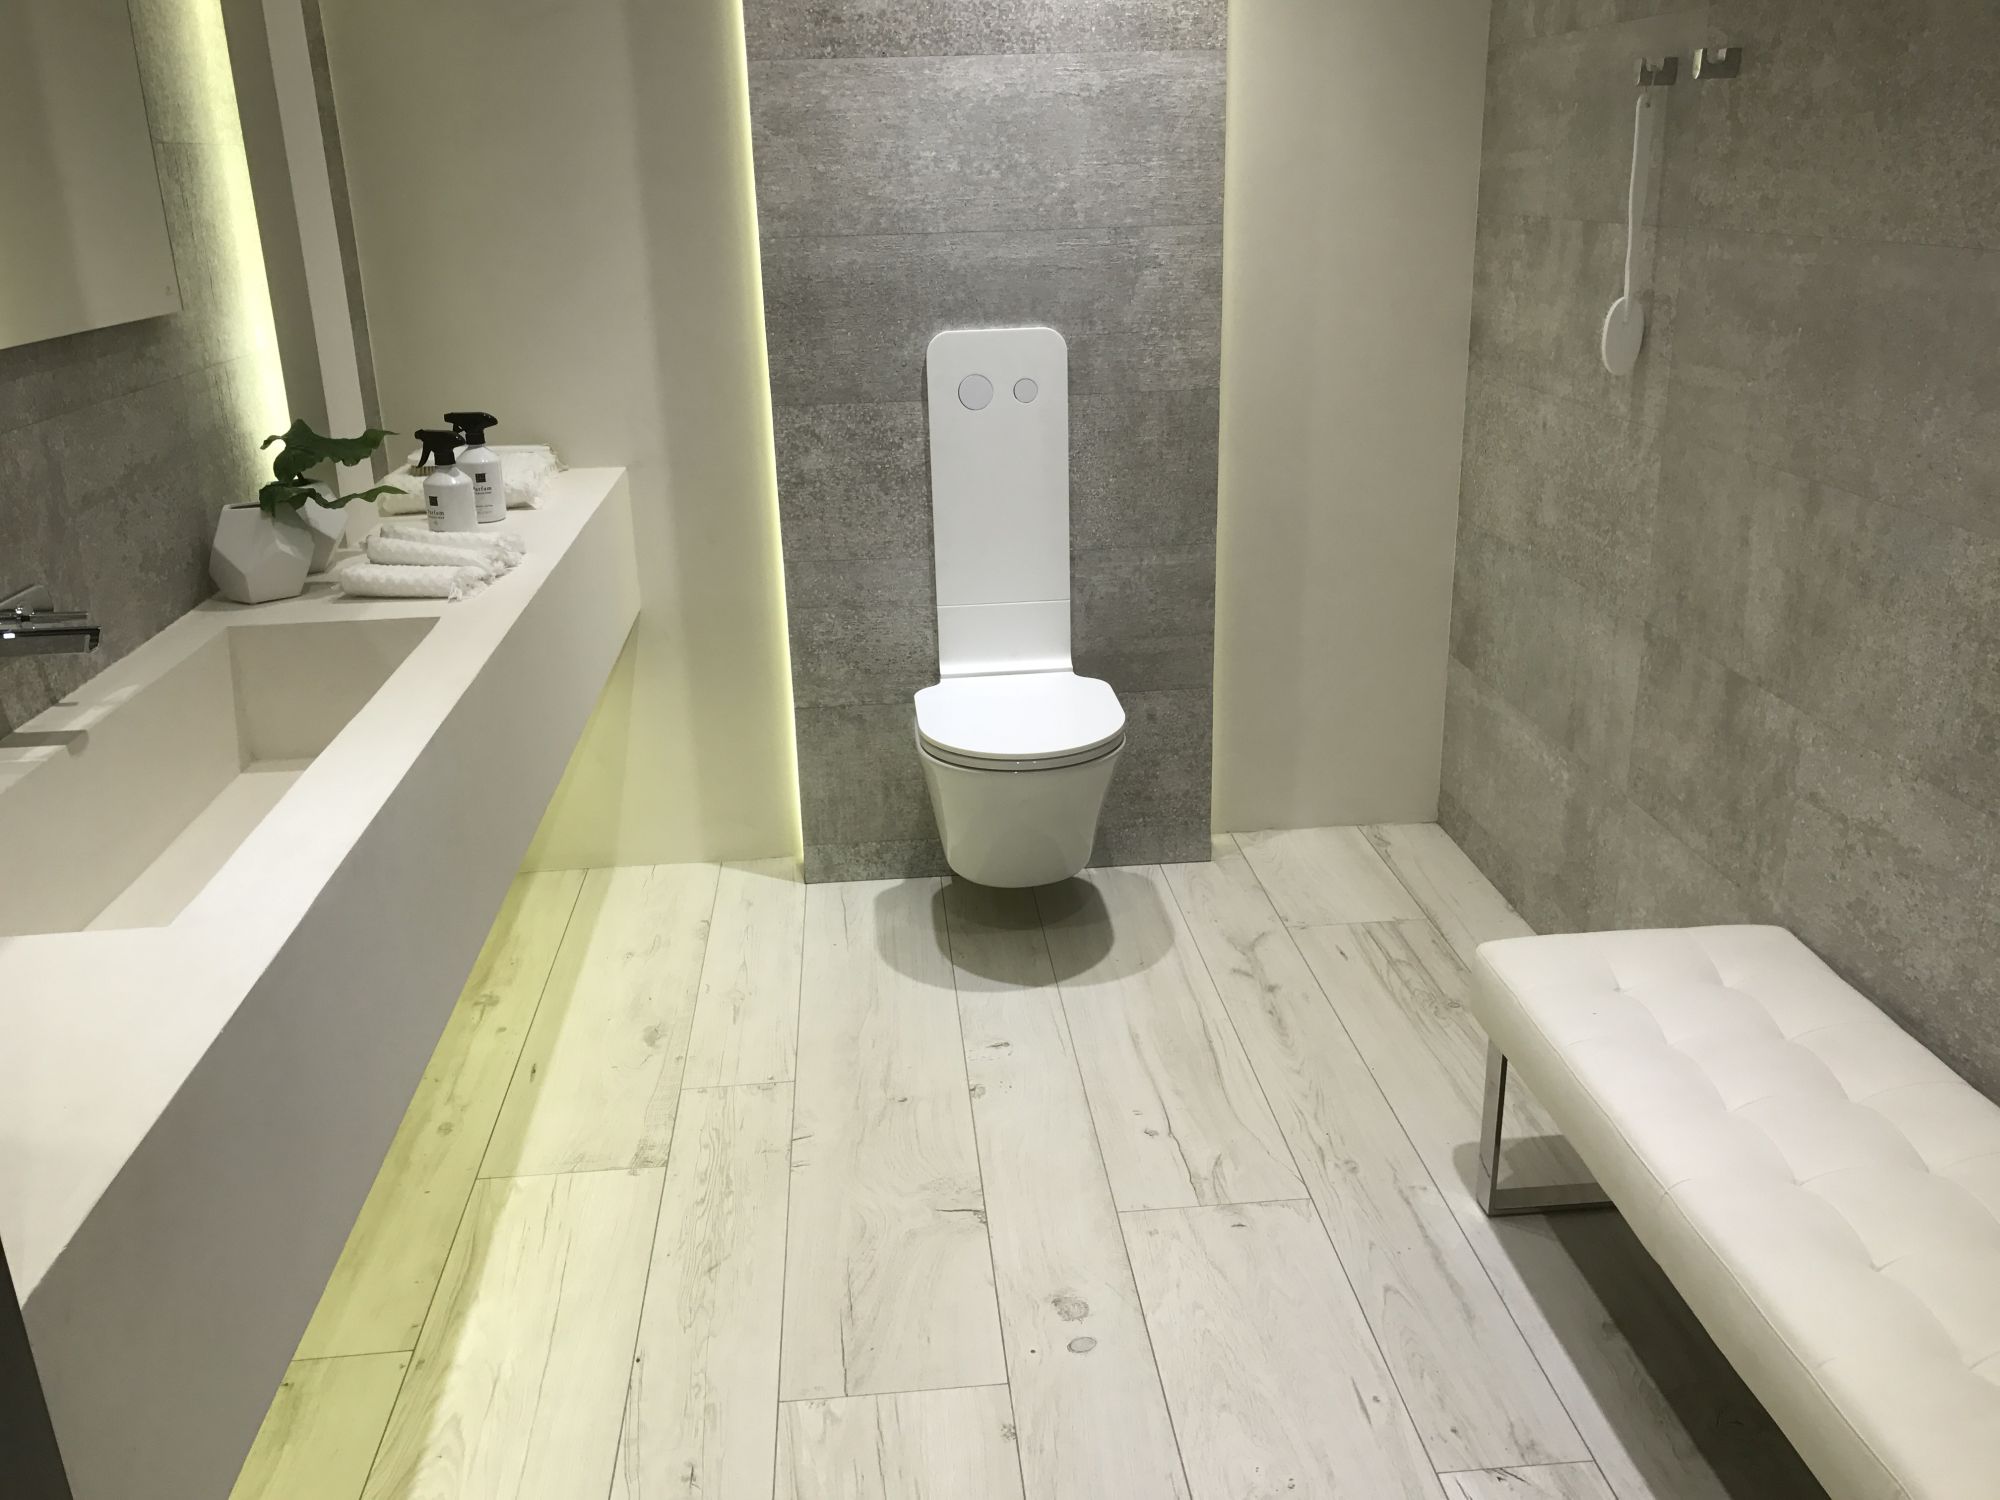 Wood inspired floor tiles in sleek modern bathroom design by Porcelanosa